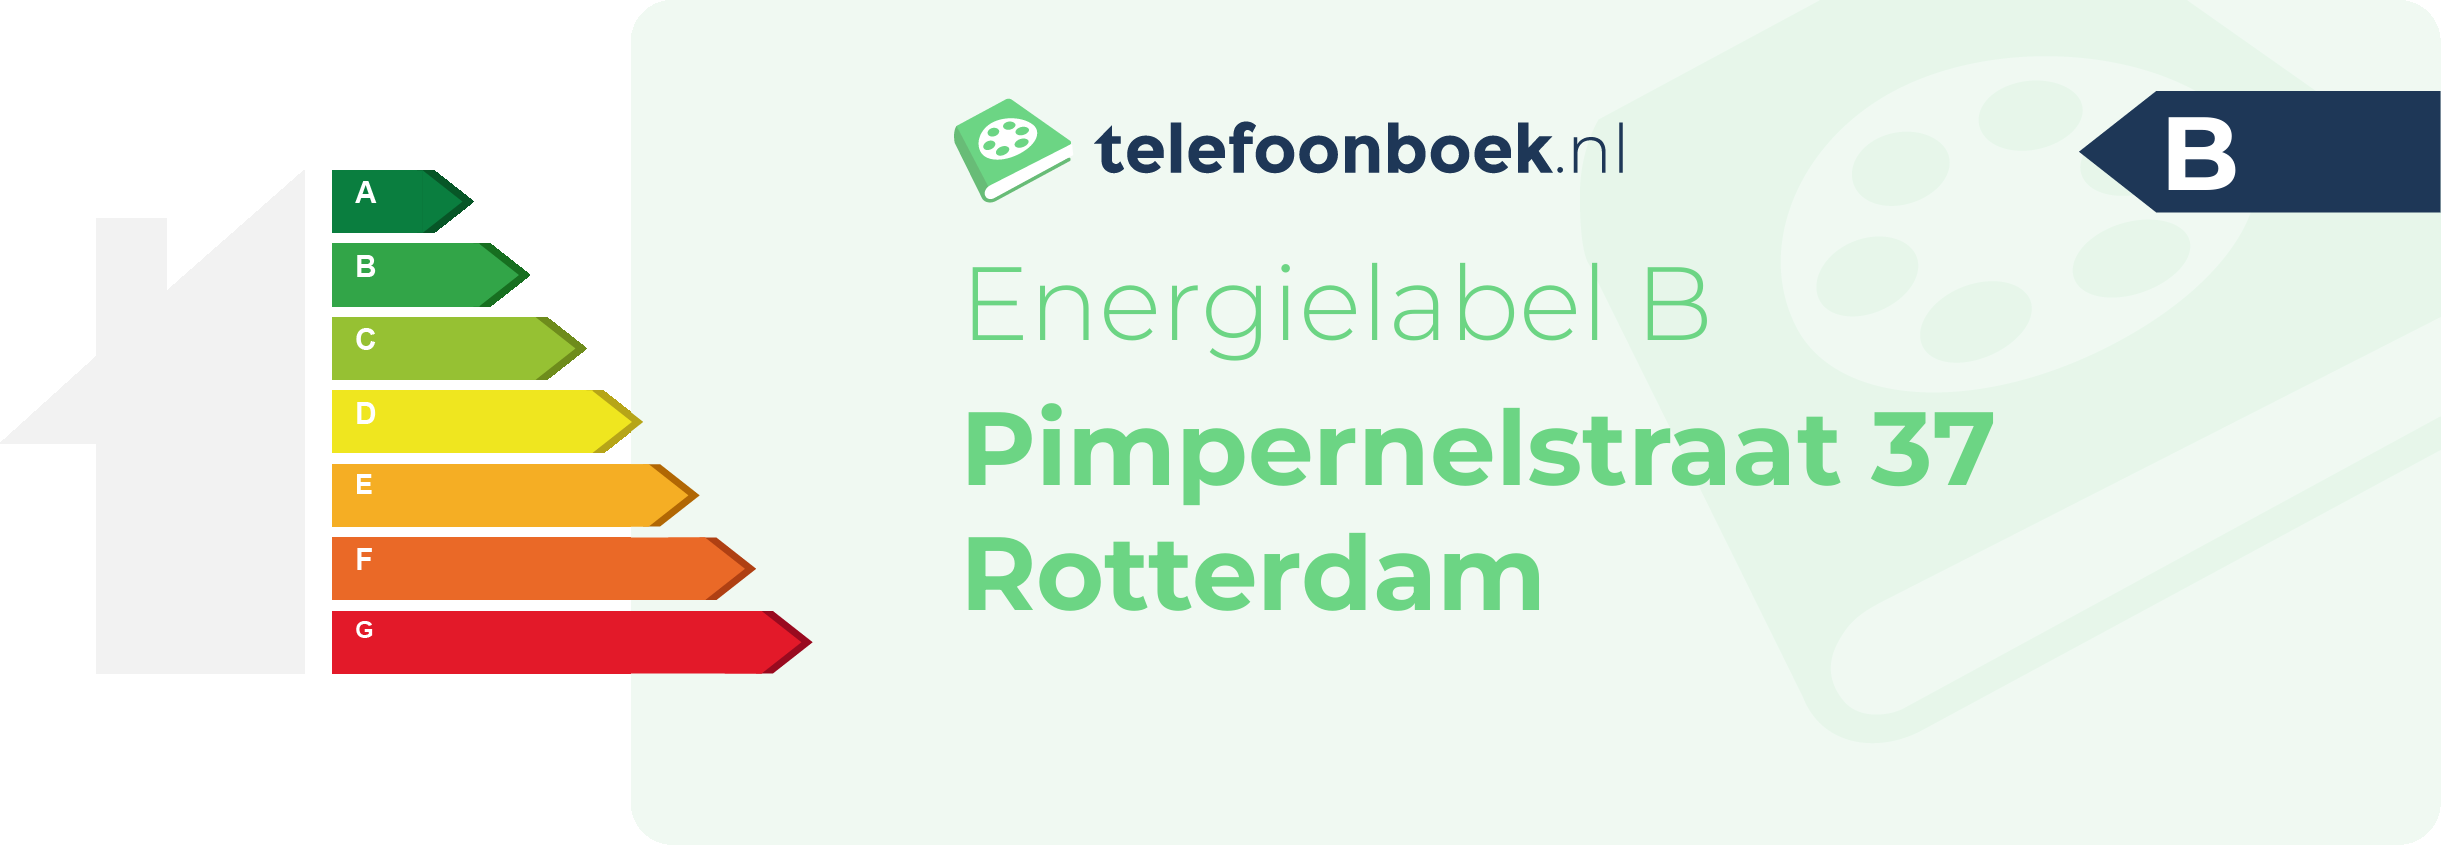 Energielabel Pimpernelstraat 37 Rotterdam